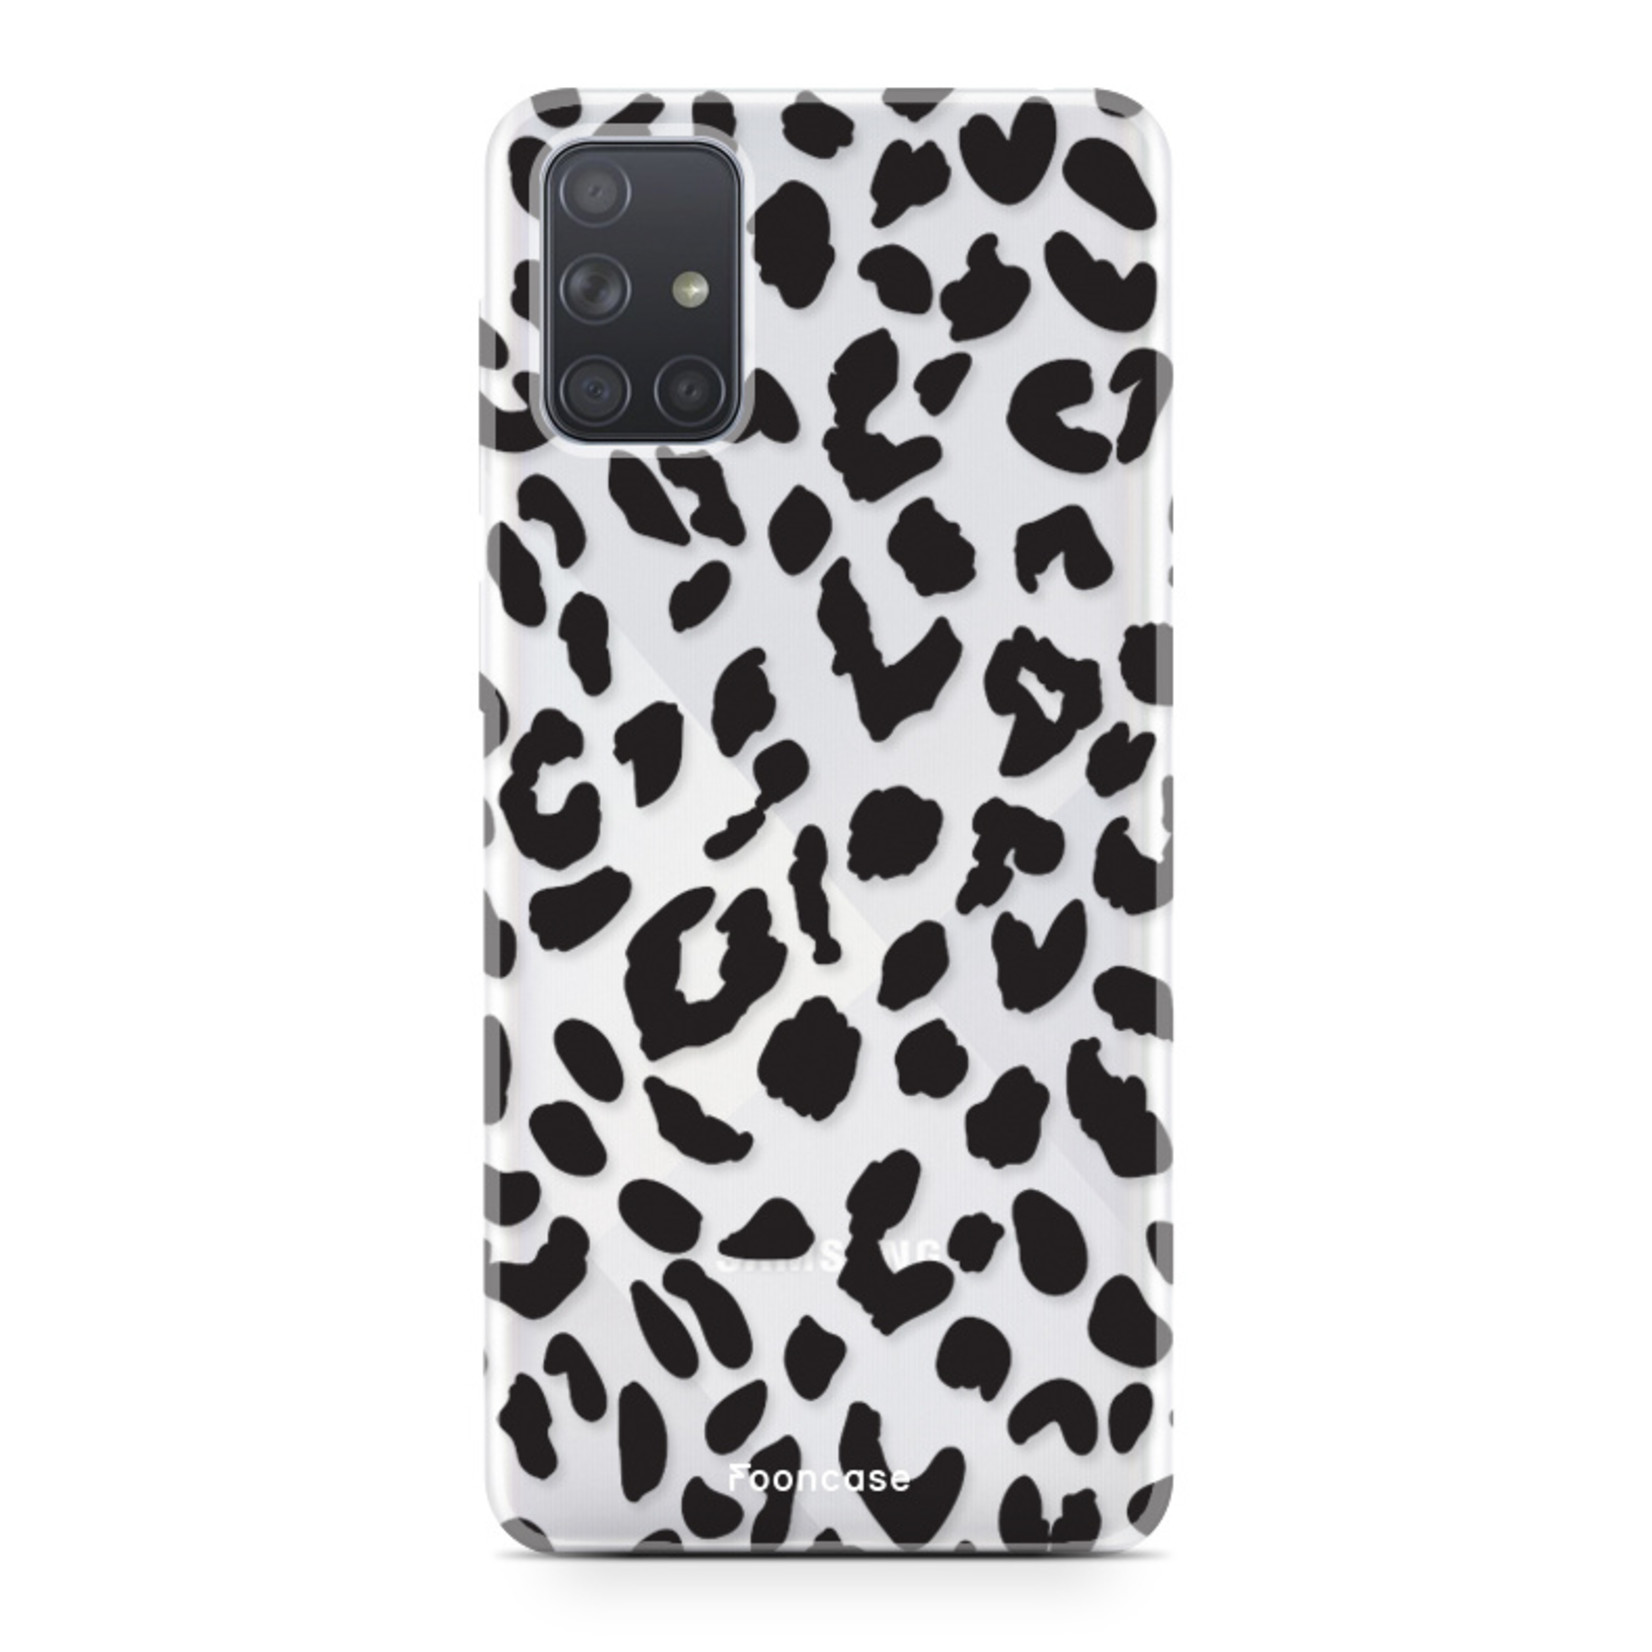 Samsung Galaxy A71 Case - Leopard